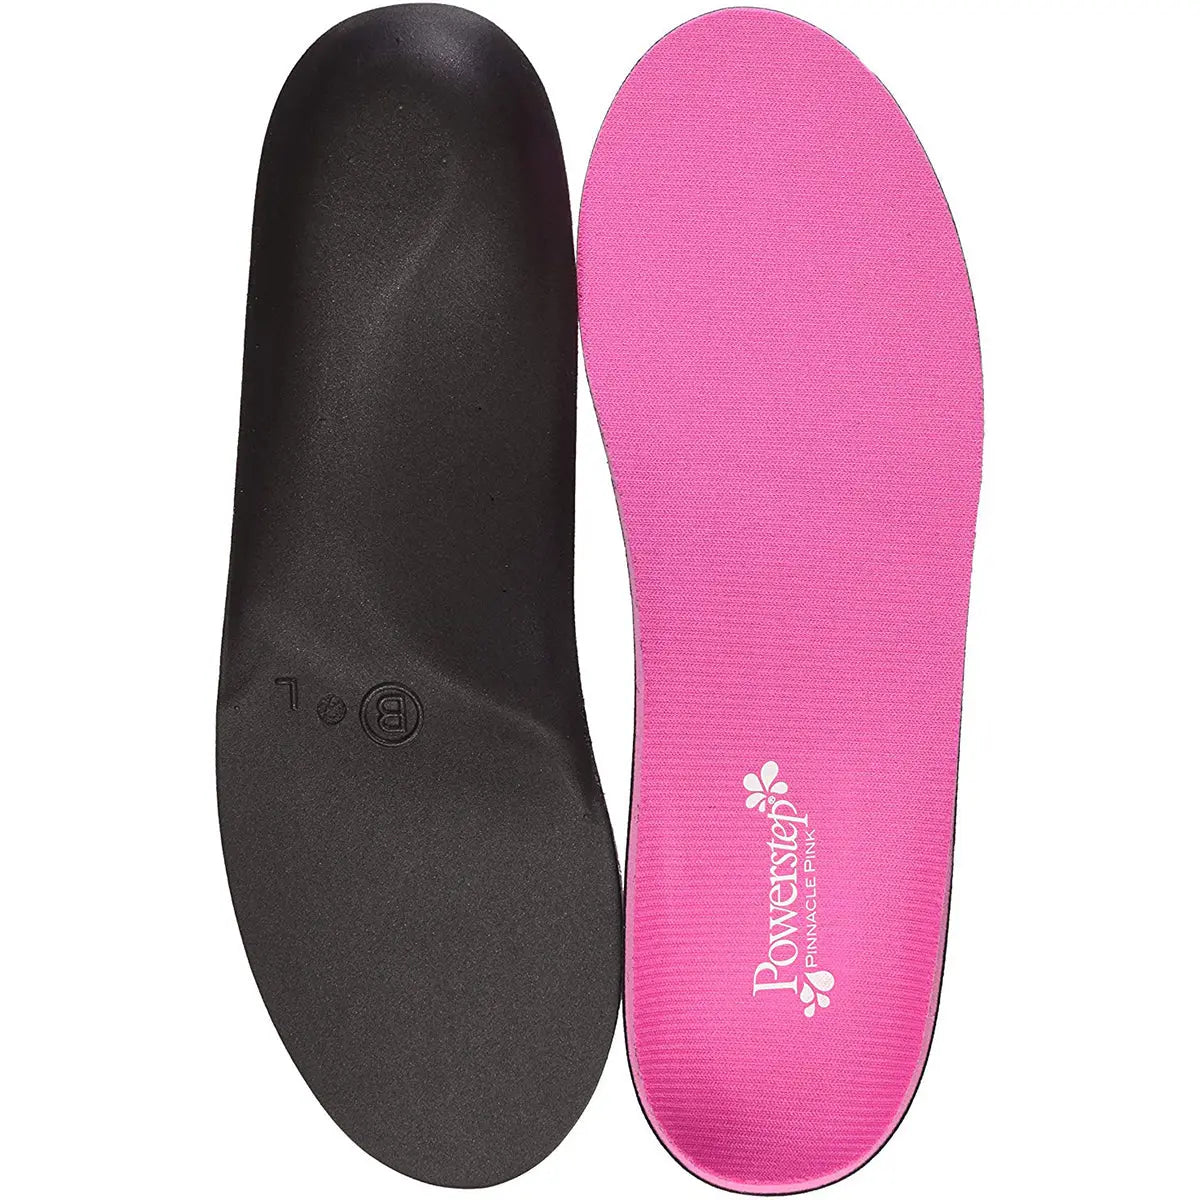 Powerstep Pinnacle Pink Full Length Orthotic Shoe Insoles Powerstep